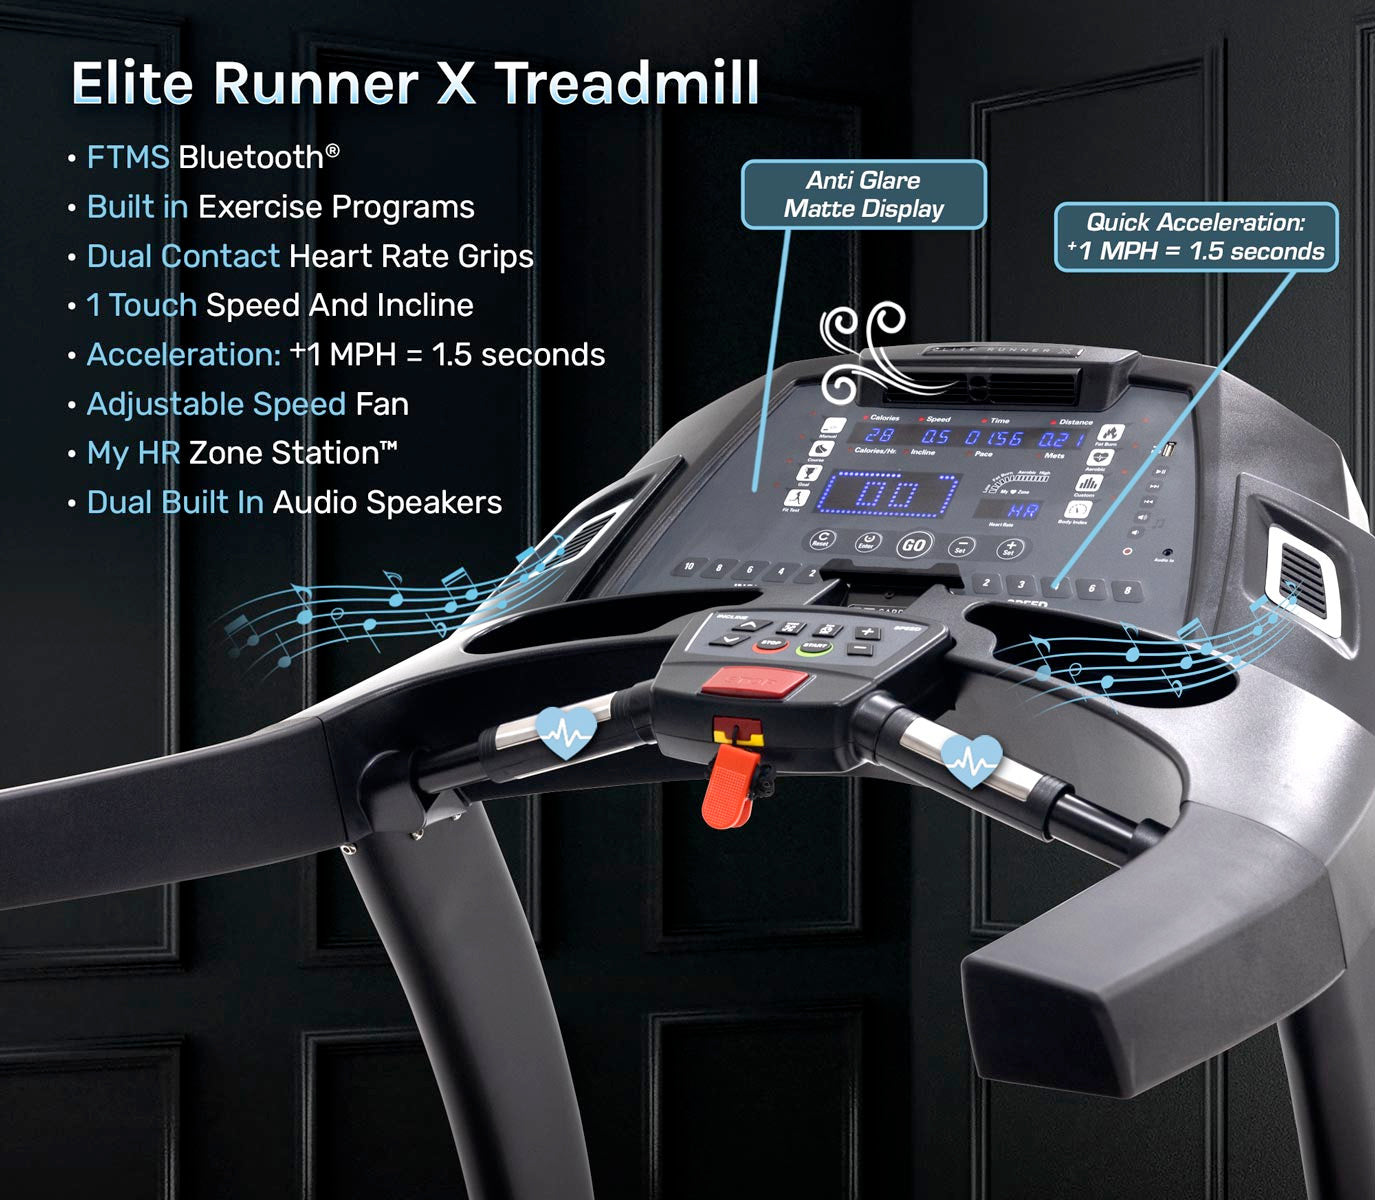 Console on the 3G Elite Treadmill